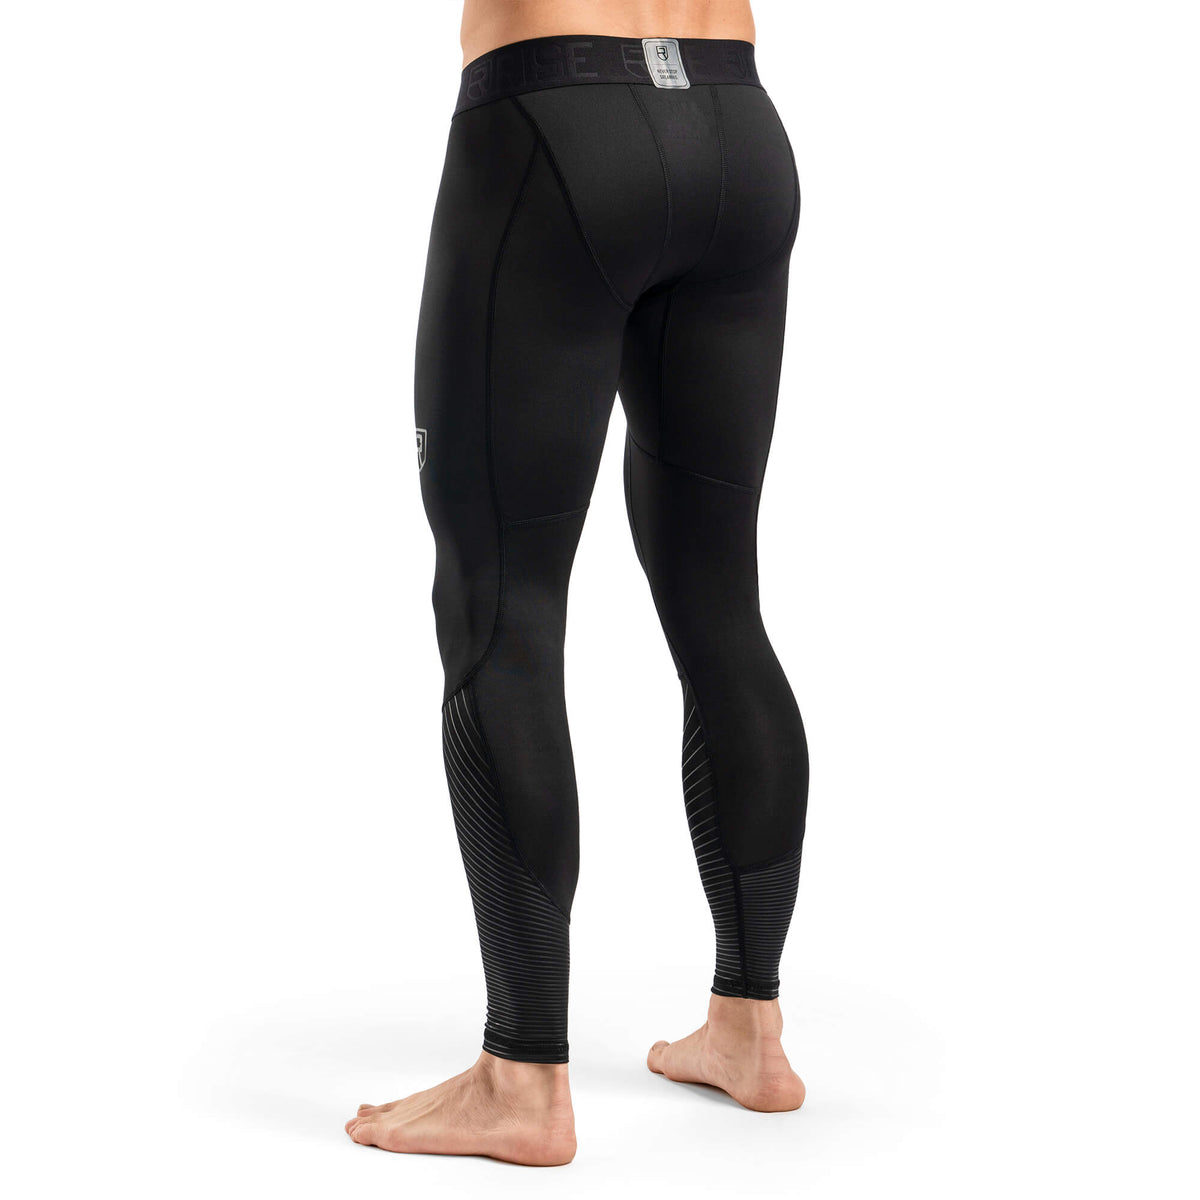 Reebok Womens Highrise Running Compression Athletic Pants, Black, Medium 